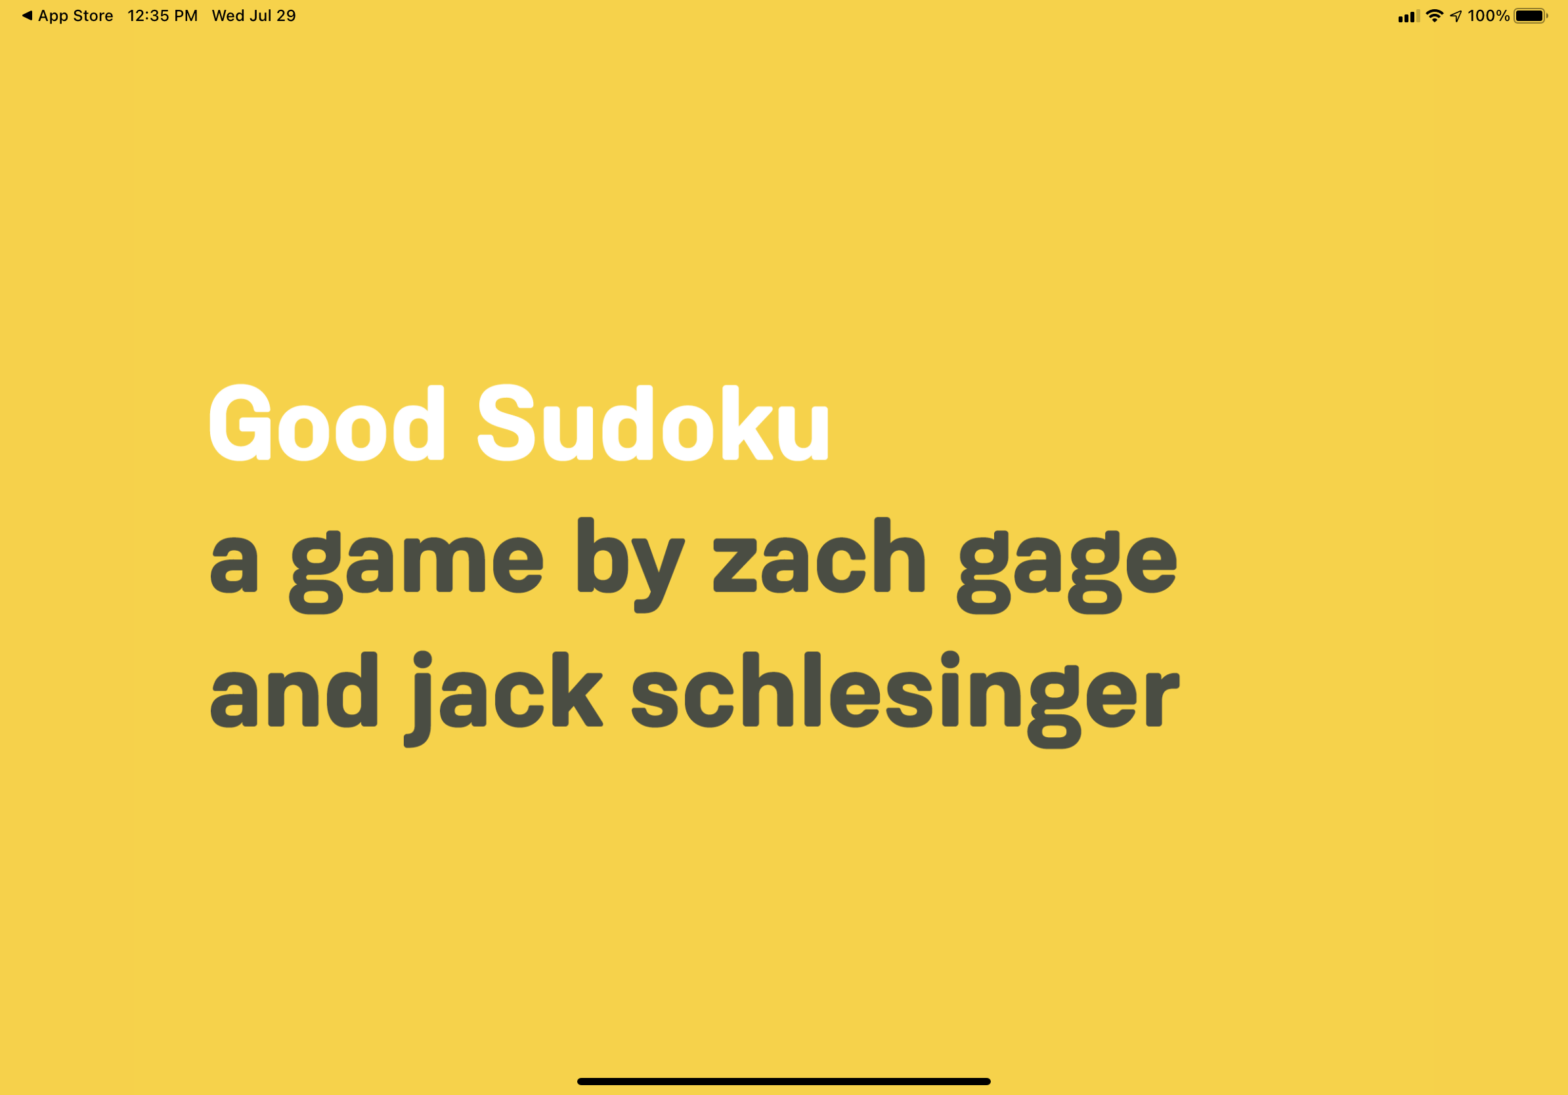 Good Sudoku, Bad Sudoku?